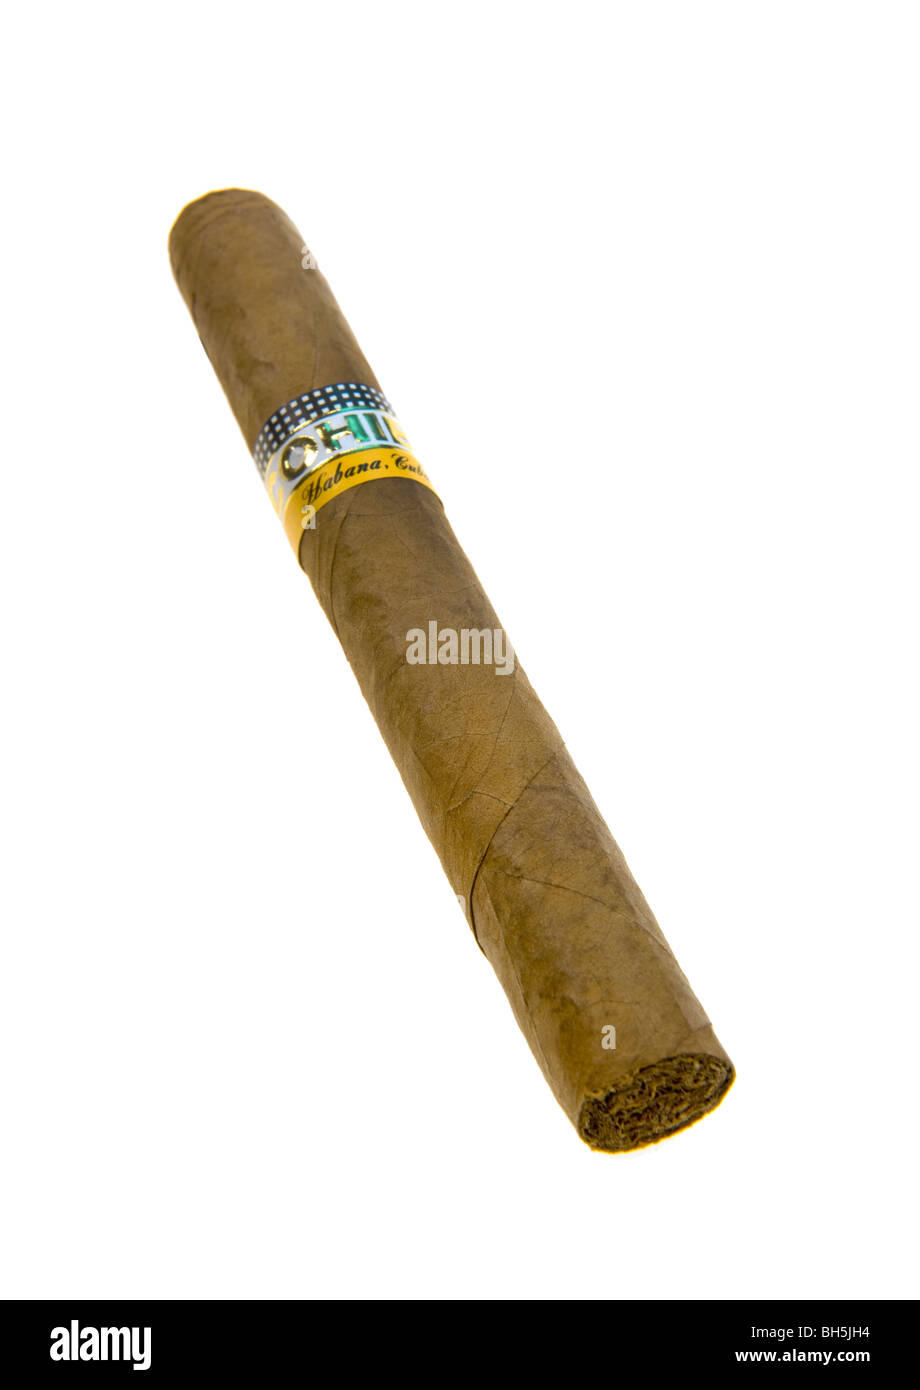 Habana sigari Cohiba siglo II il tubo a mano a mano il sigaro sigari di Avana Cuba Havanna Kuba fumando fumante fumatore di qualità elevata Foto Stock